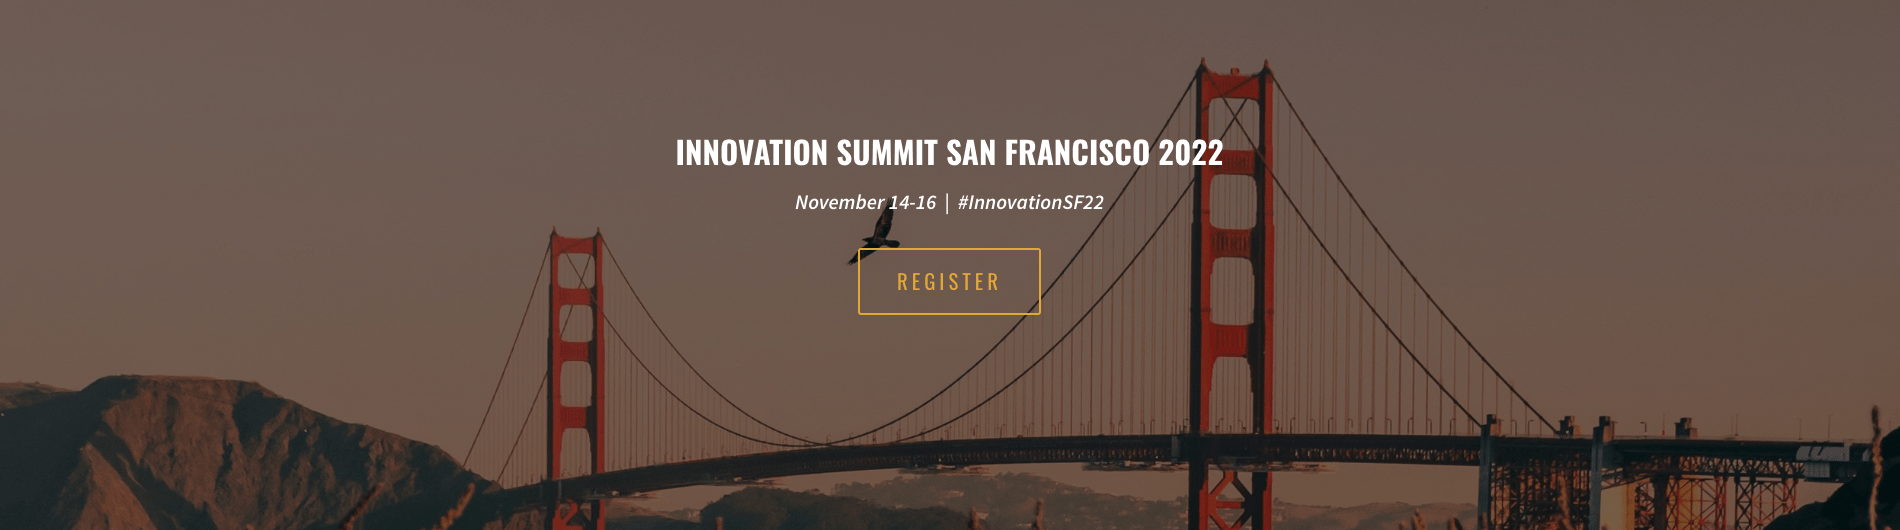 Innovation Summit San Francisco 2022 banner